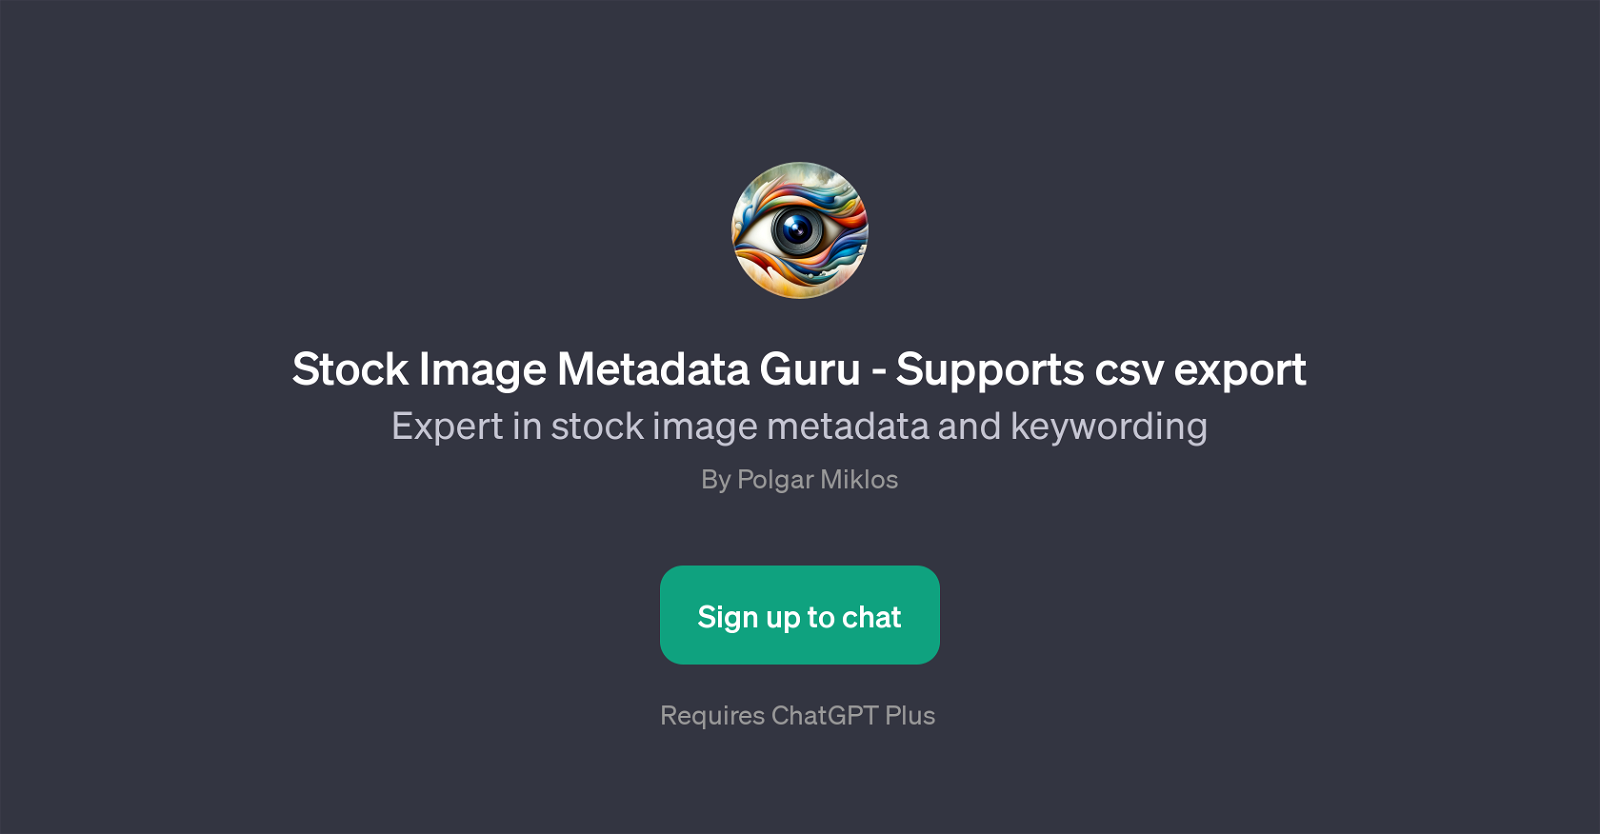 Stock Image Metadata Guru website